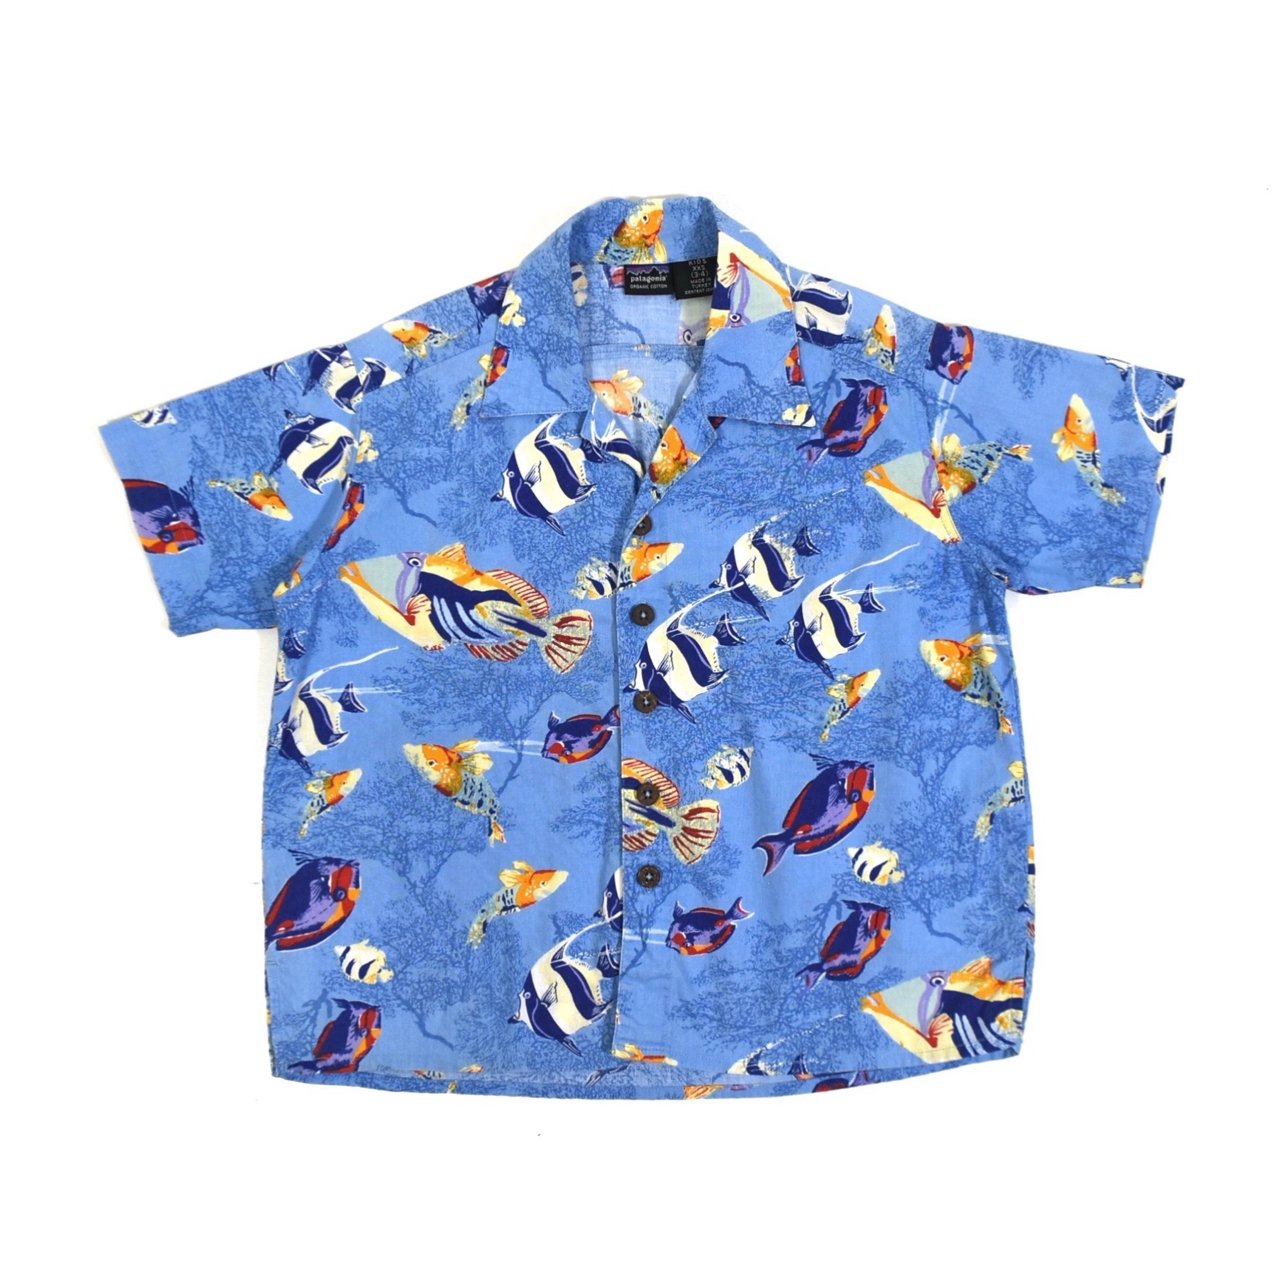 2003 PATAGONIA S/S Cotton shirts Kid's XXS Fish